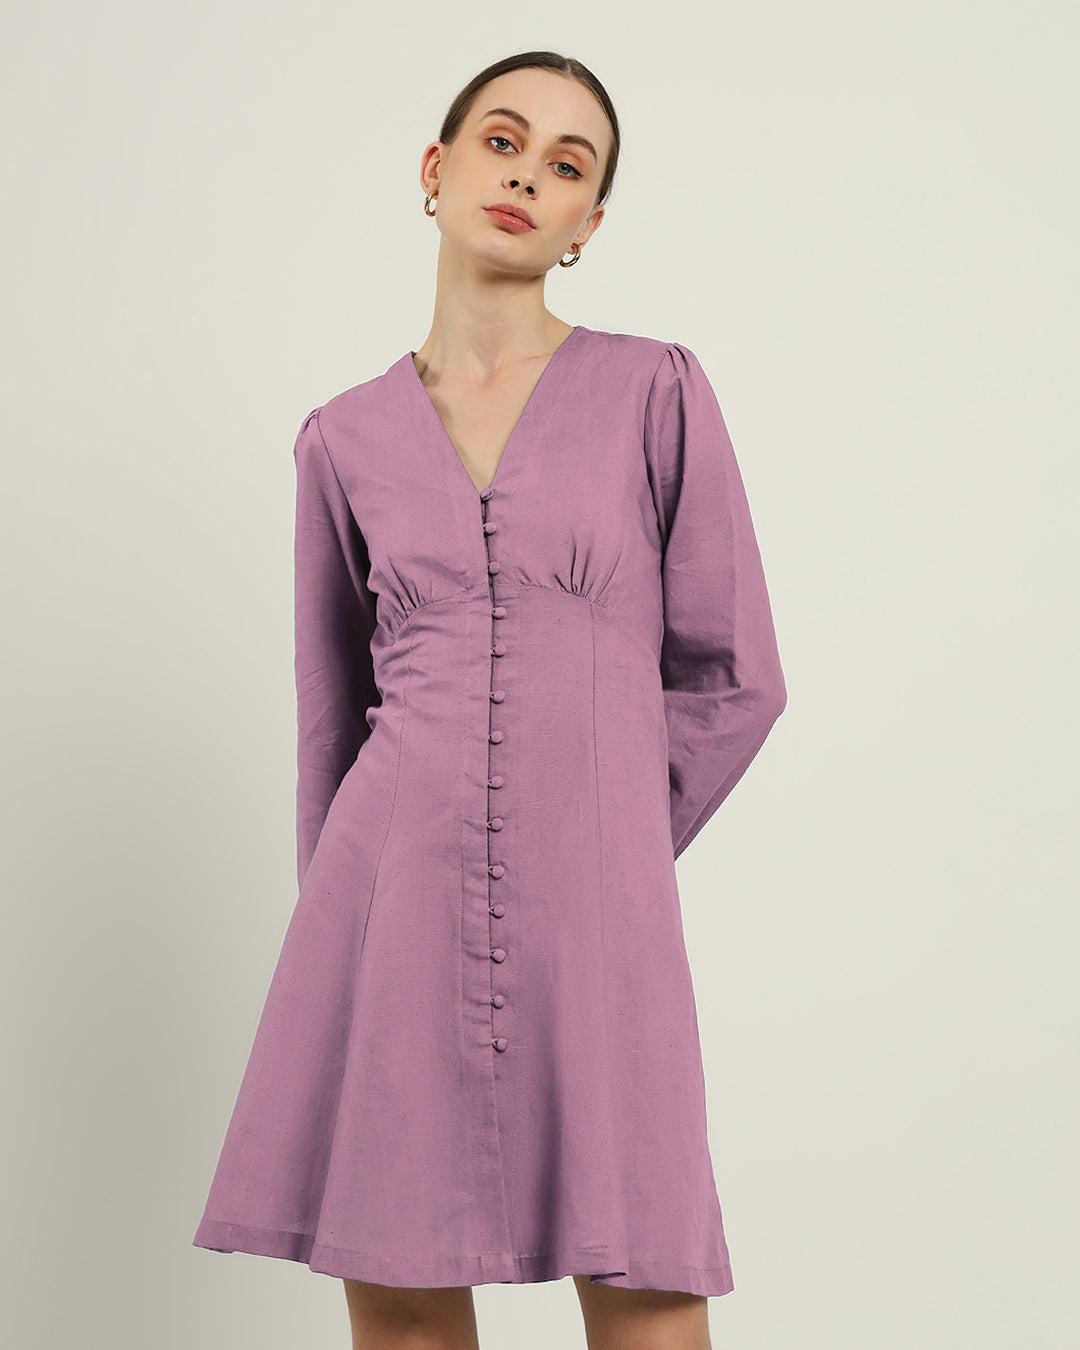 The Dafni Purple Swirl Cotton Dress